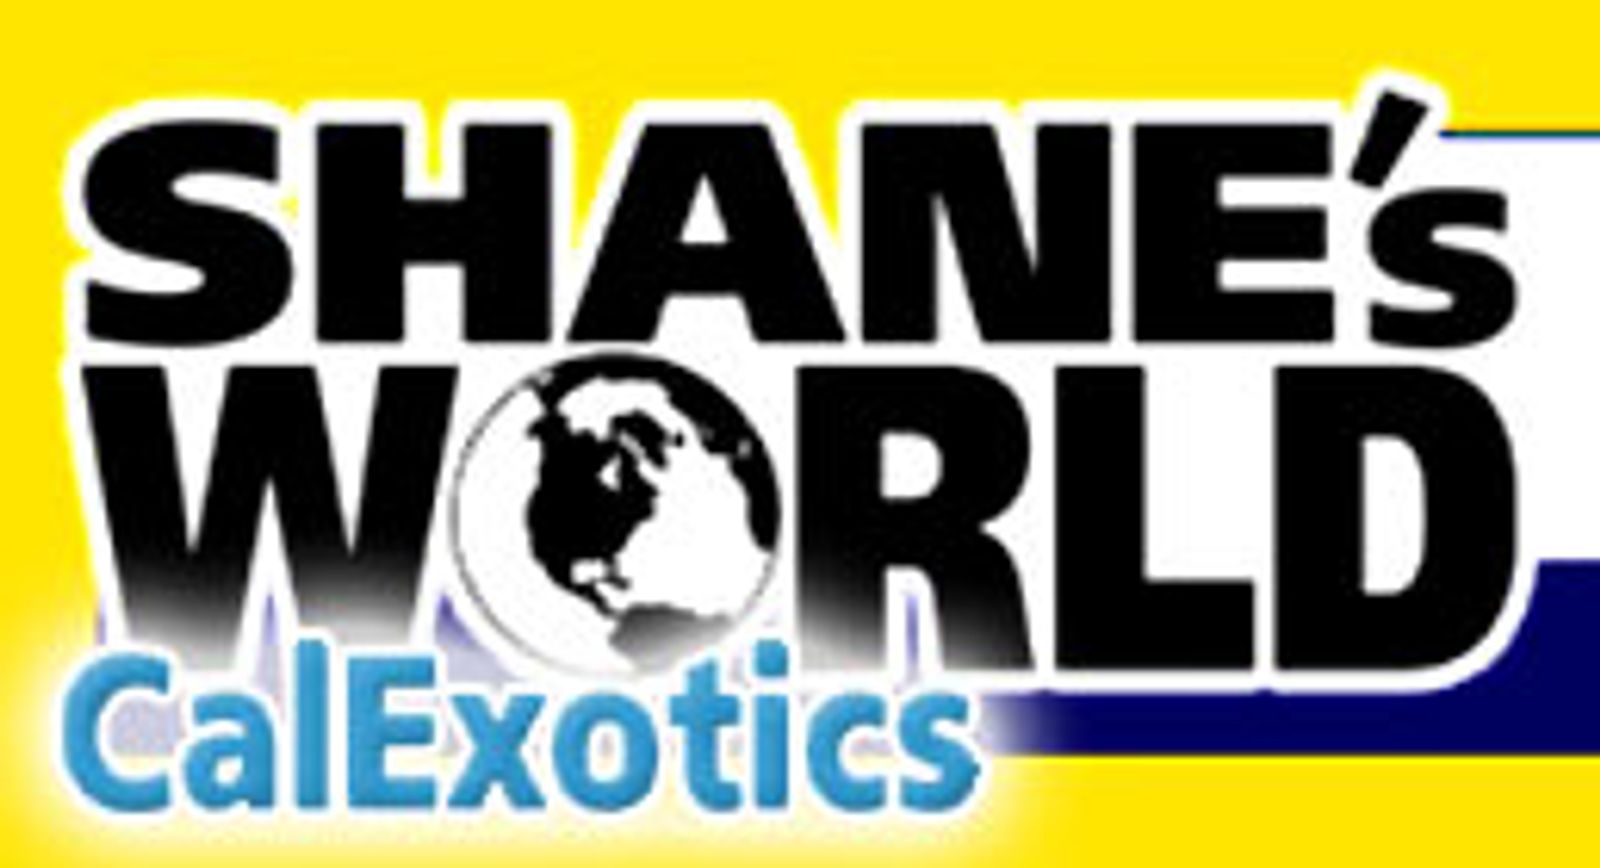 Shane&#8217;s World Studios Licenses Brand to Cal Exotics